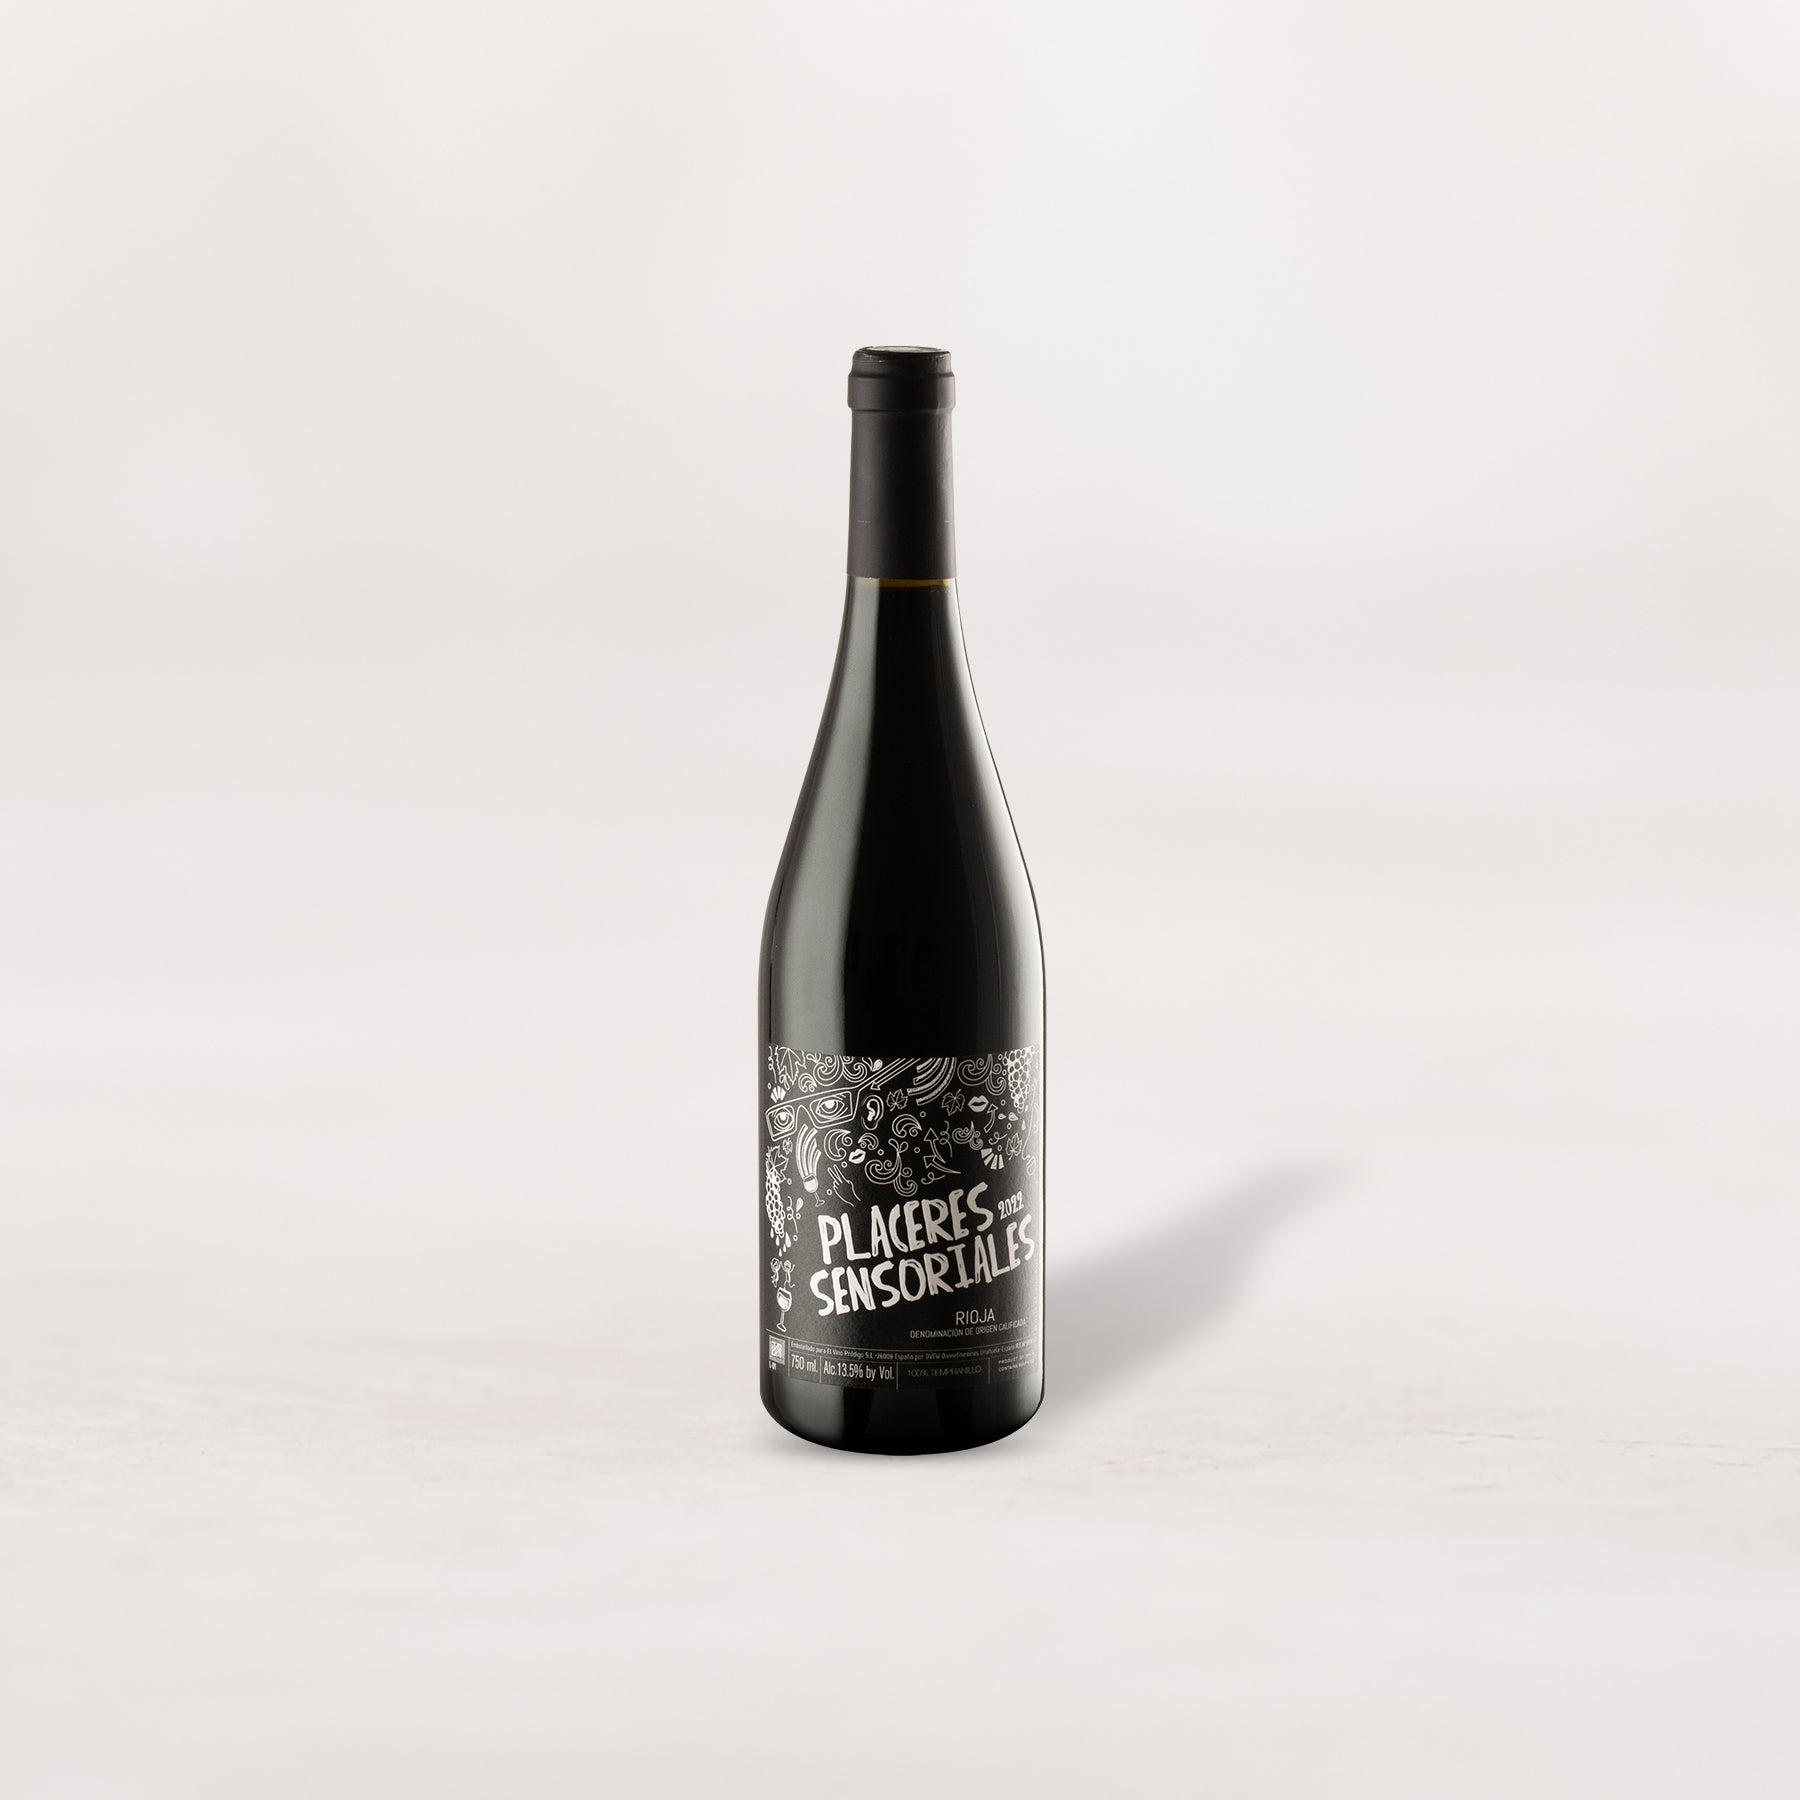 El Vino Prodigo, Rioja "Placeres Sensoriales"